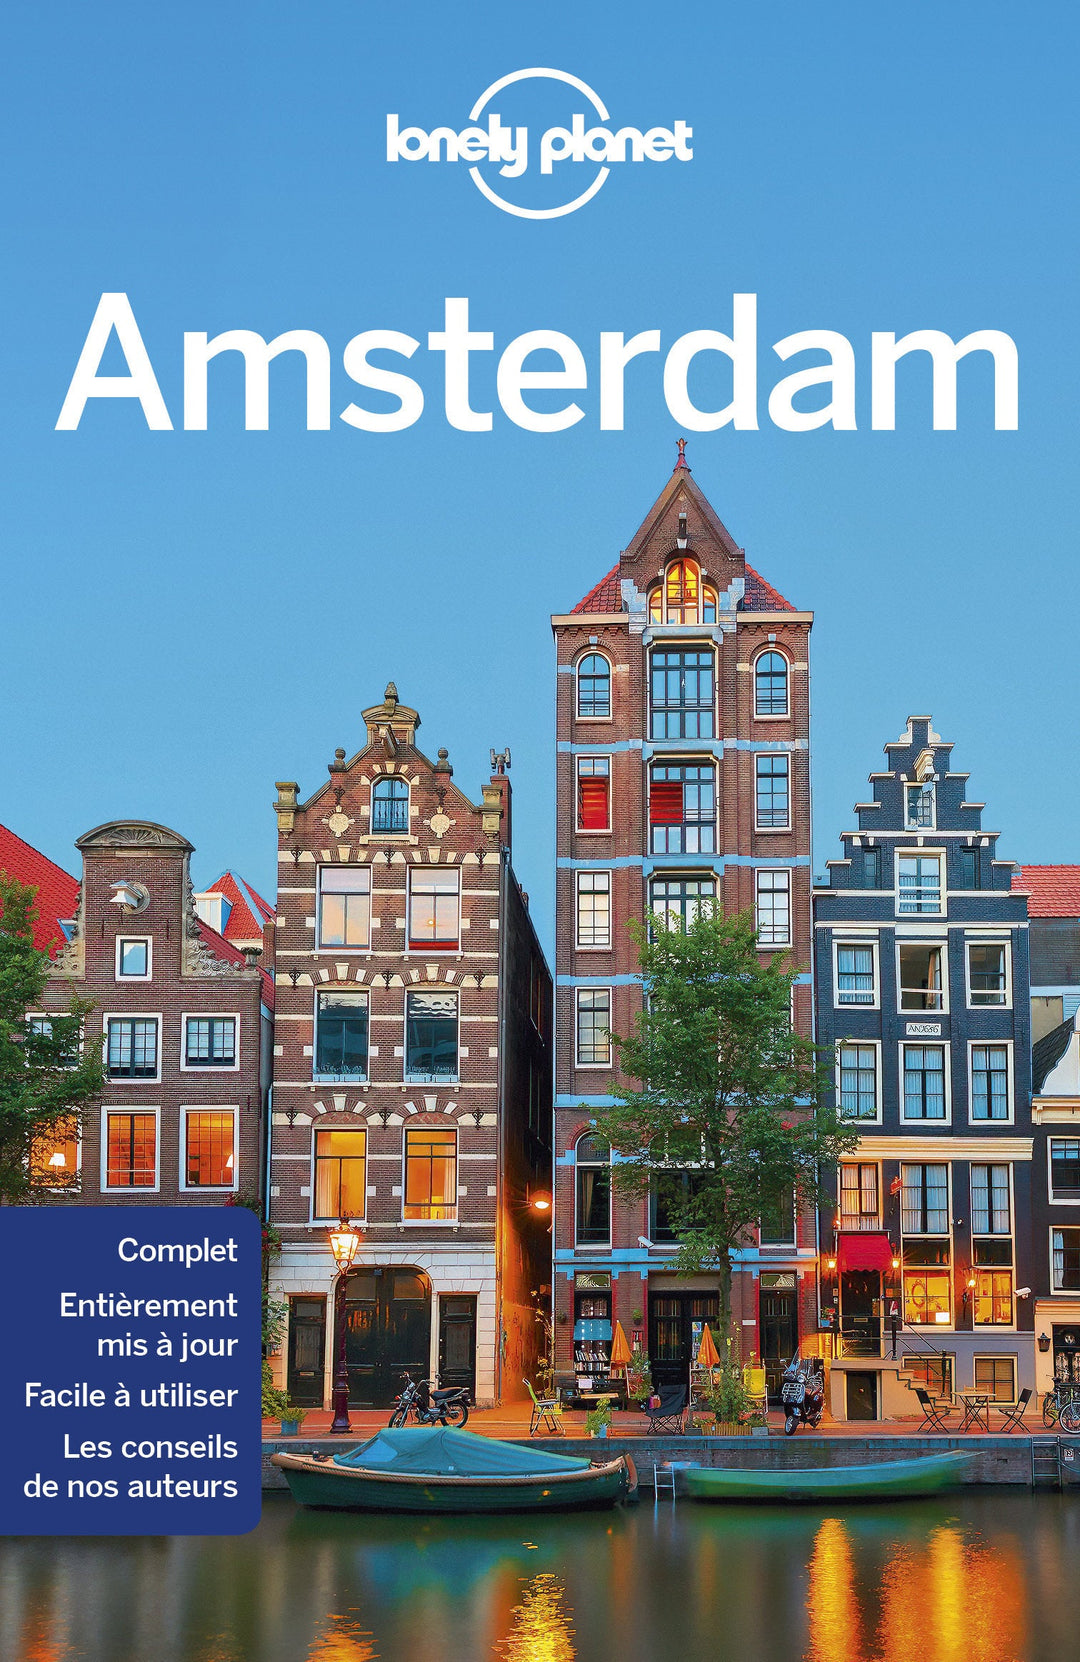 Guide de voyage - Amsterdam - Édition 2022 | Lonely Planet guide de voyage Lonely Planet 